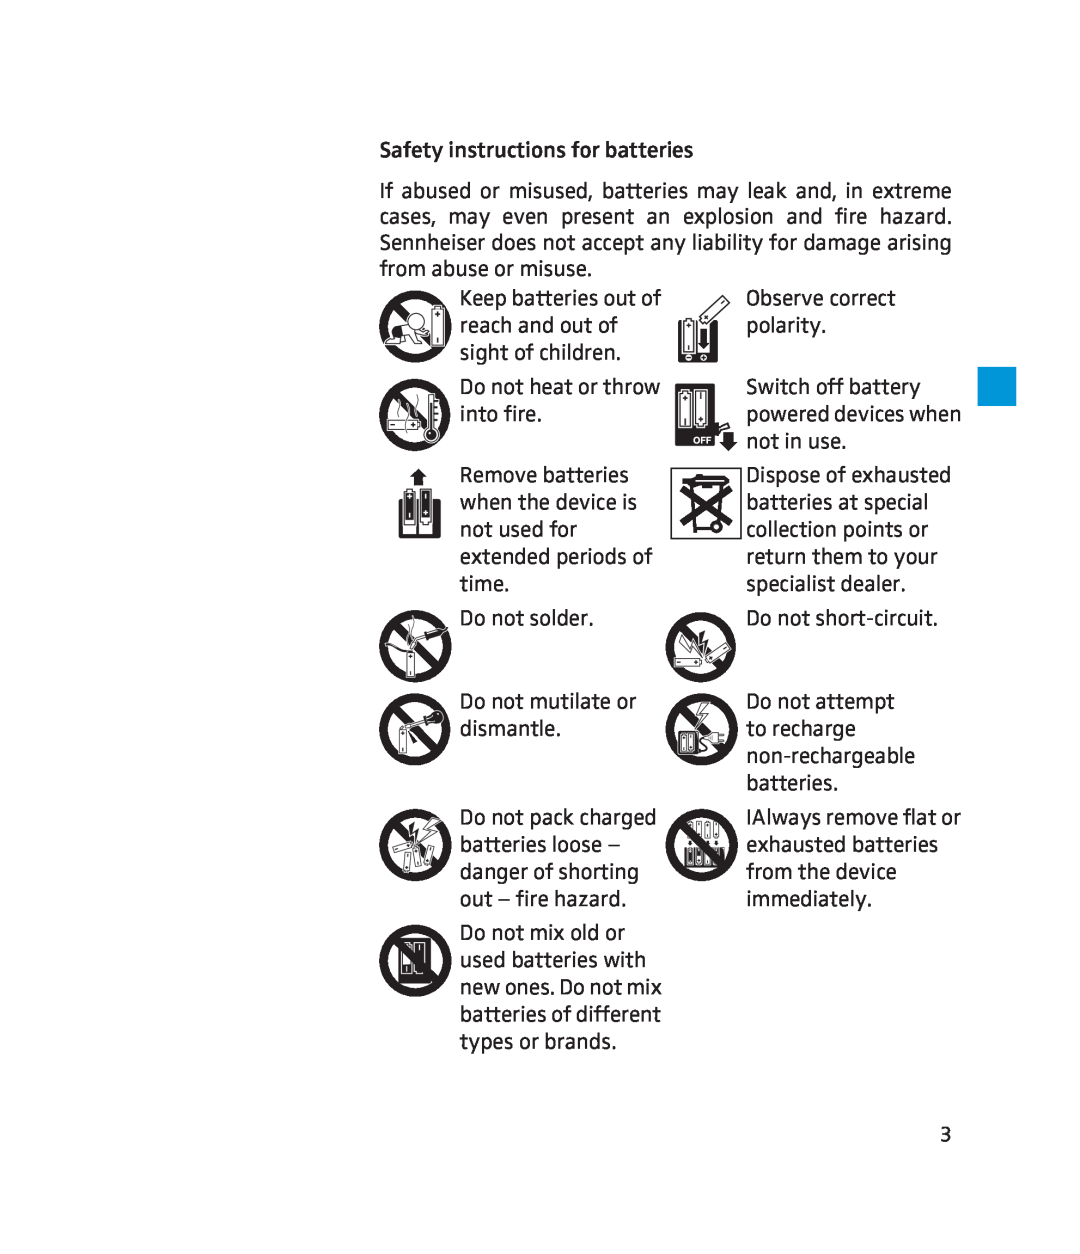 Sennheiser HMEC 250 instruction manual Safety instructions for batteries 